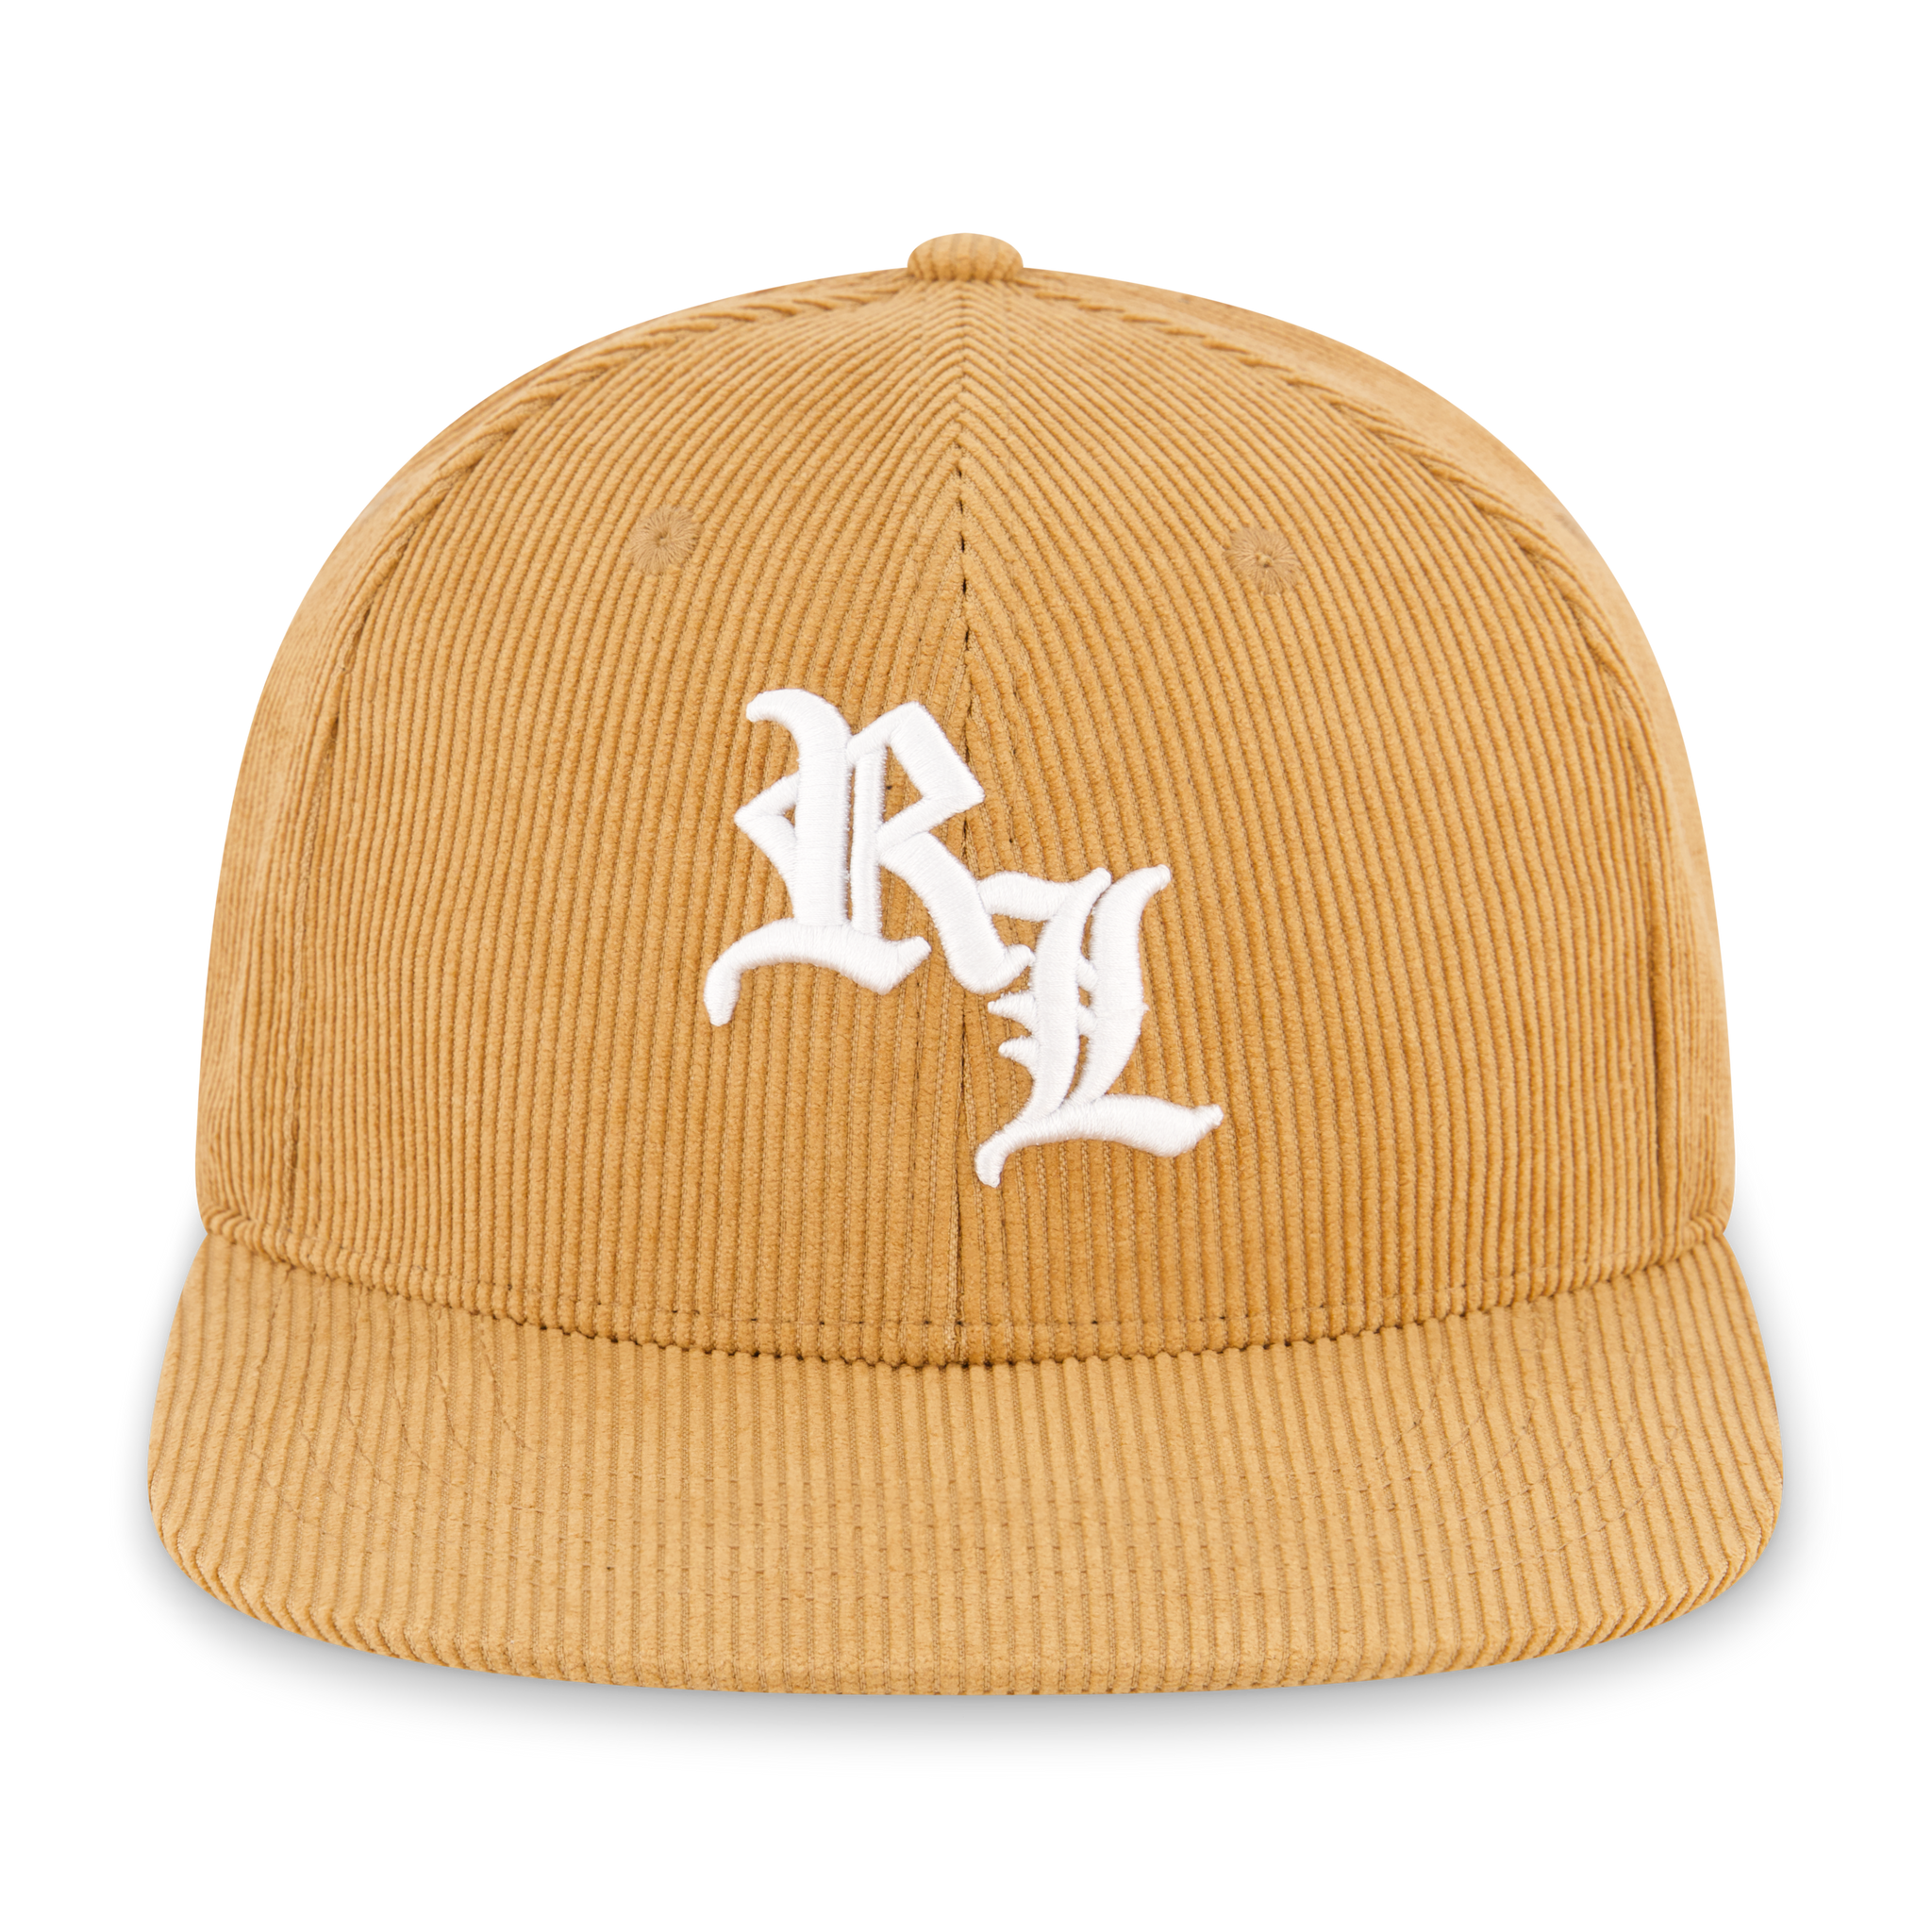 RL Cord Brown Hat